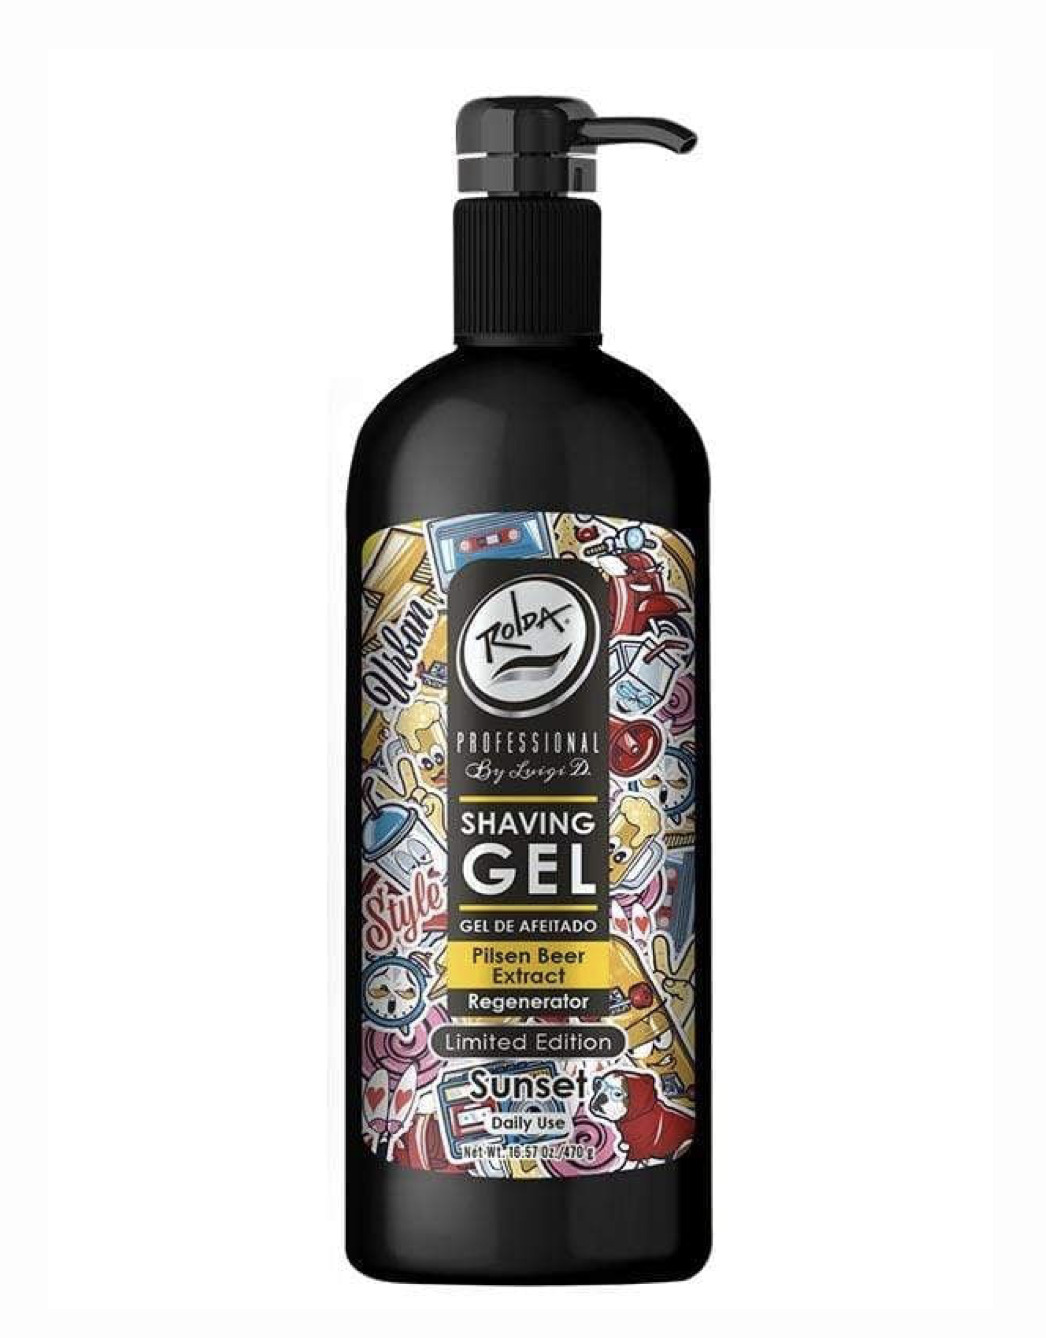 Rolda Shaving Gel Limited Edition - SunSet Pilsen Extract  17.63oz 